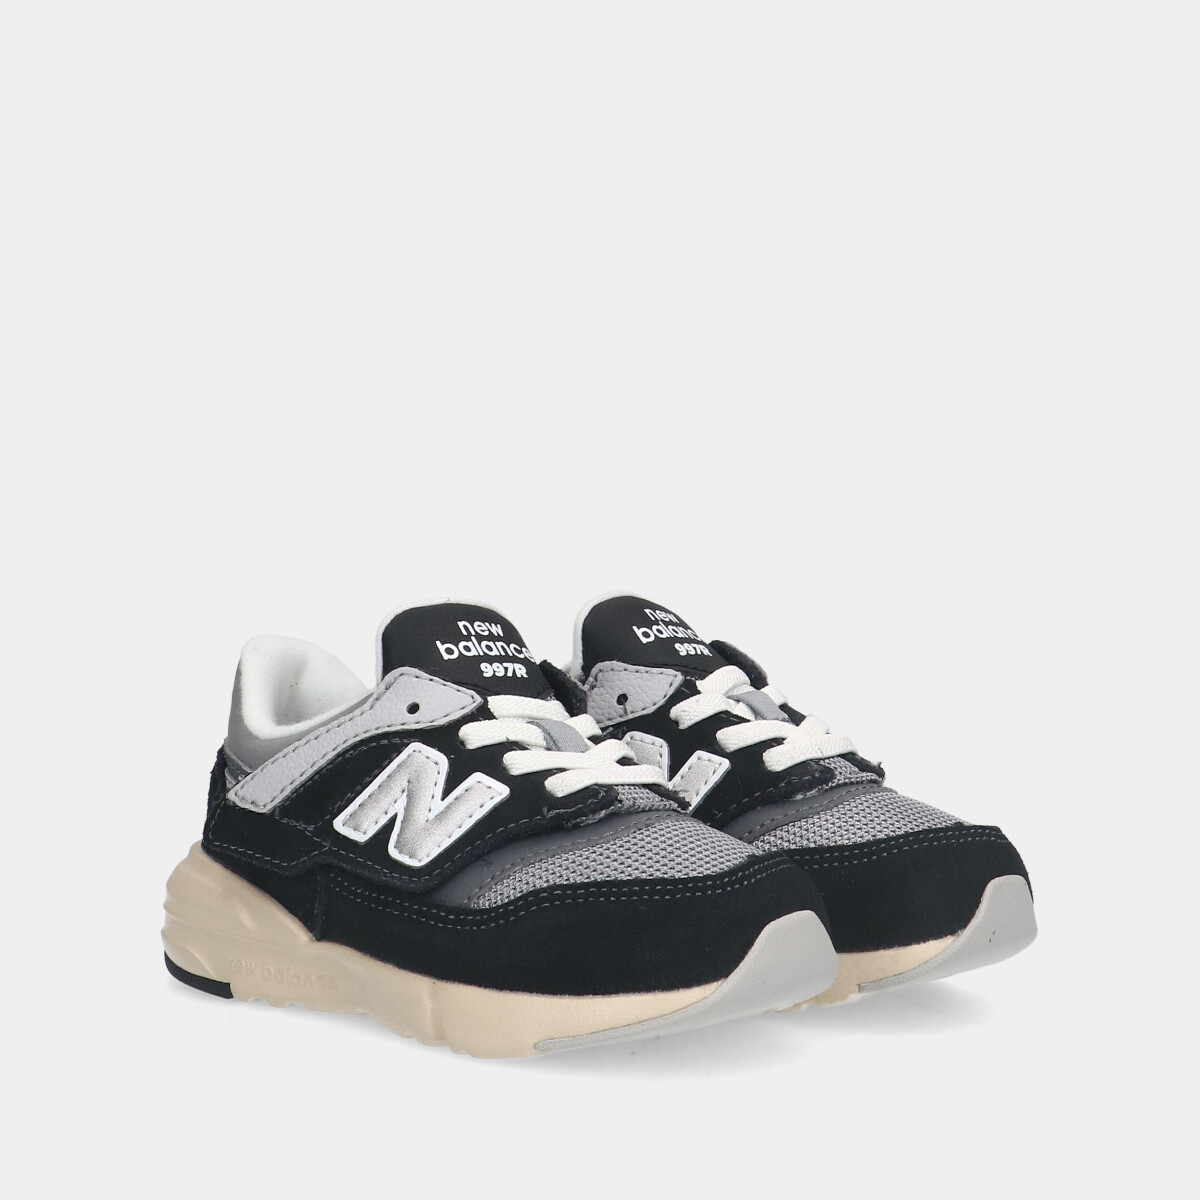 New Balance 997 Black peuter sneakers
